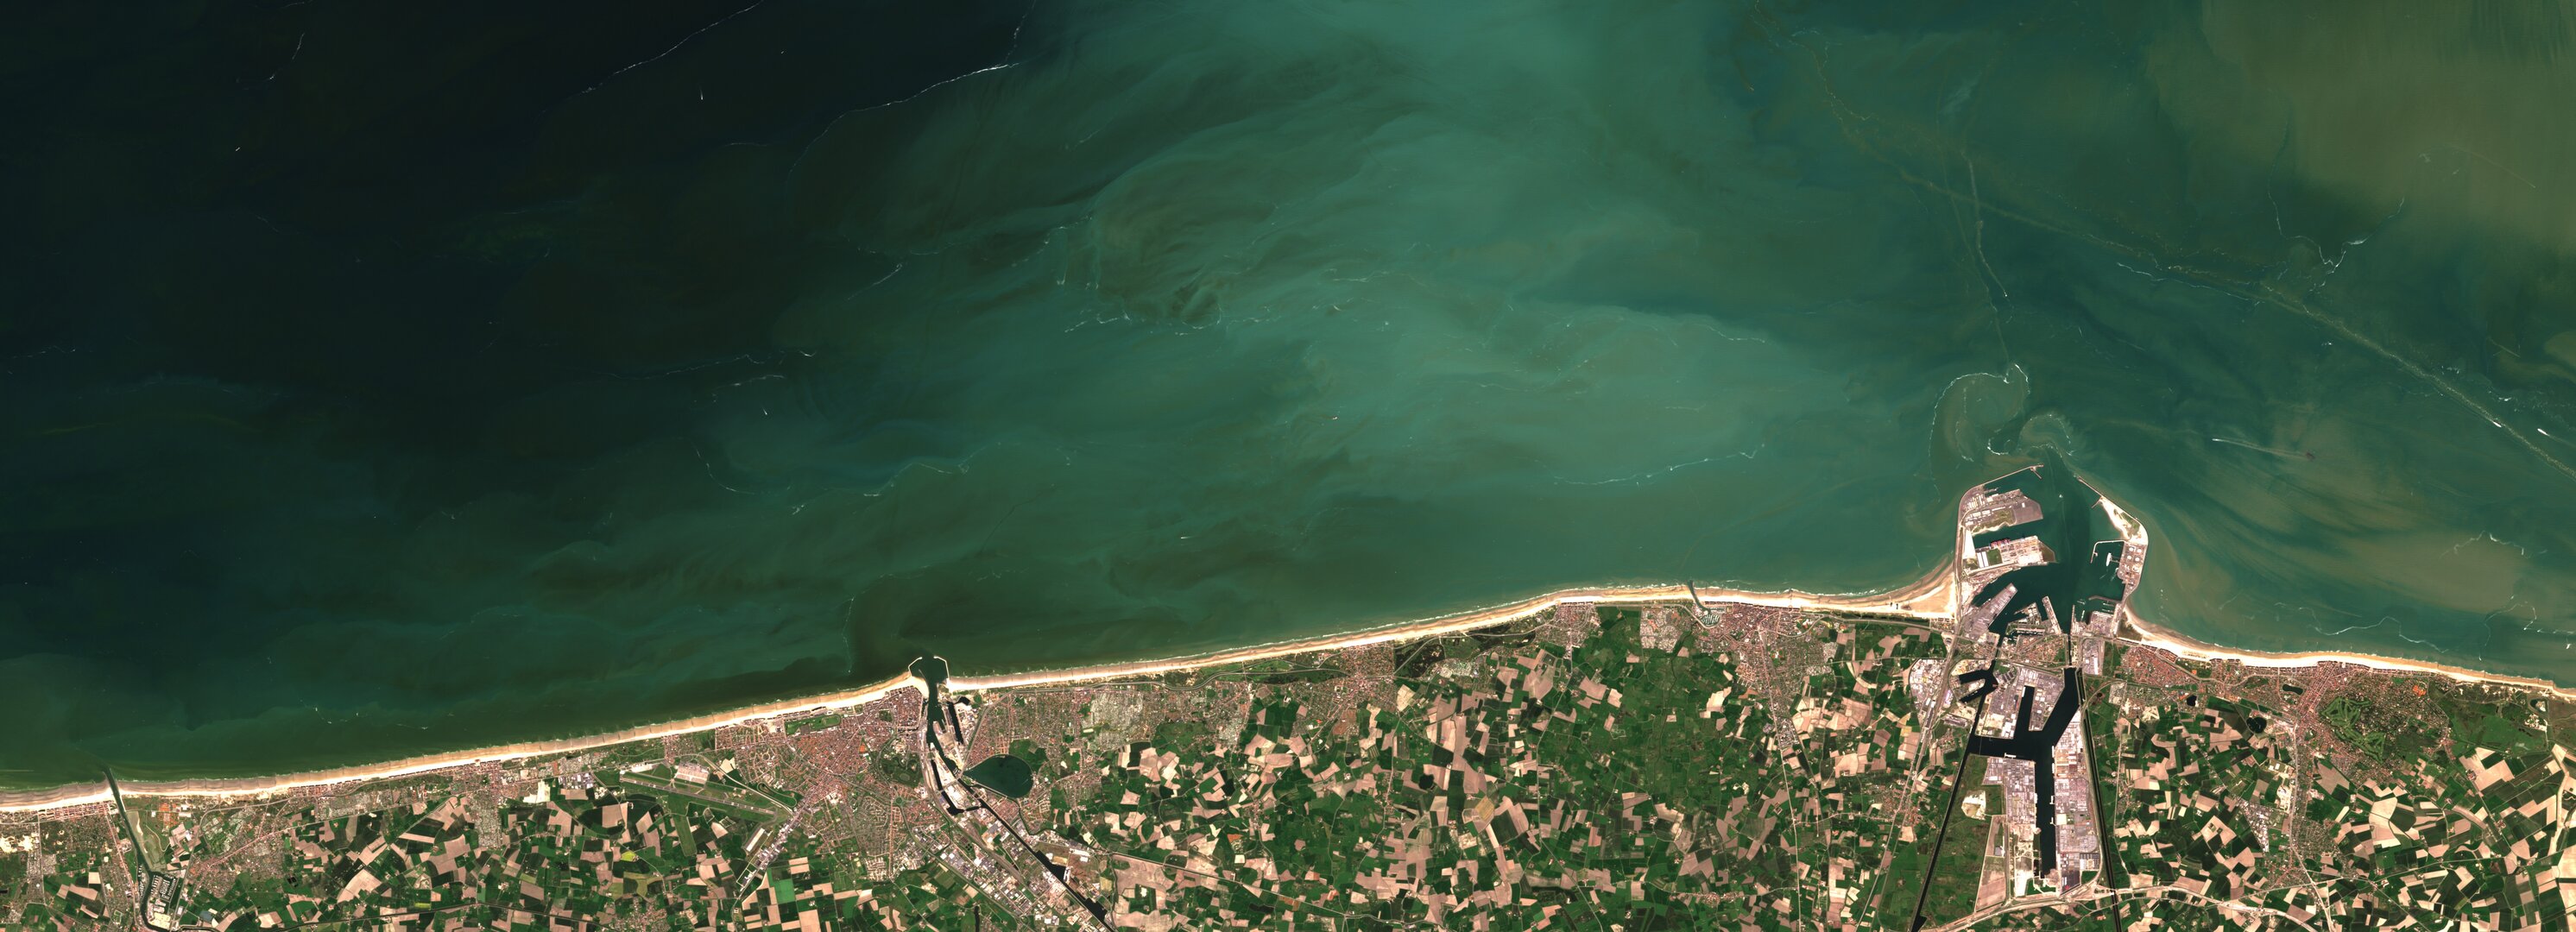 Algal bloom off Belgian coast